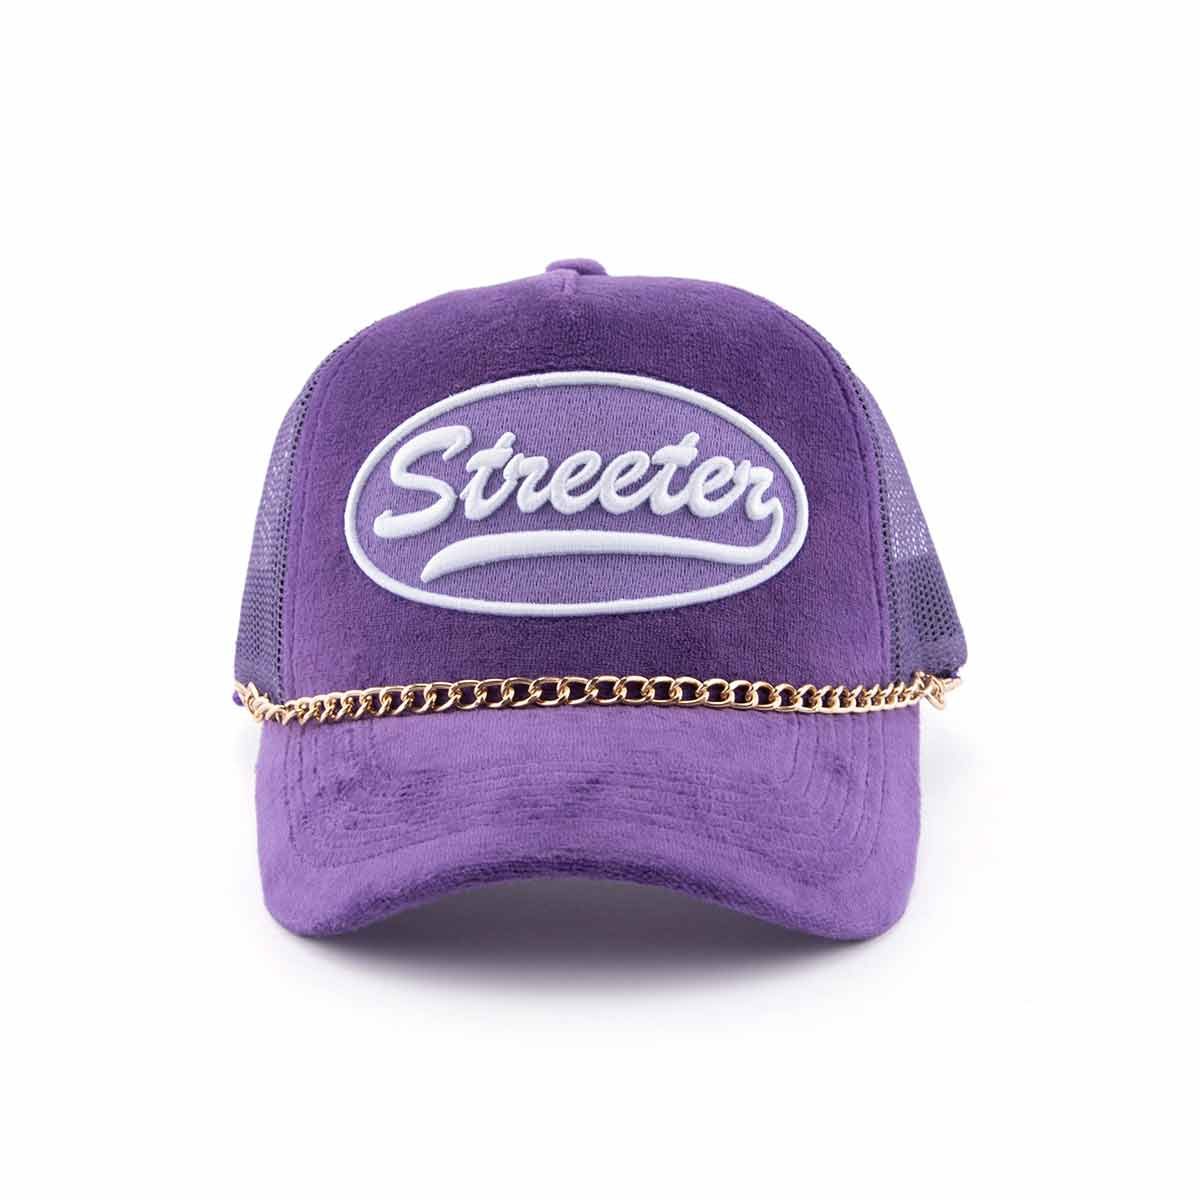 Streeter-purple-mesh-trucker-hat-for-women-and-men-KN2102051